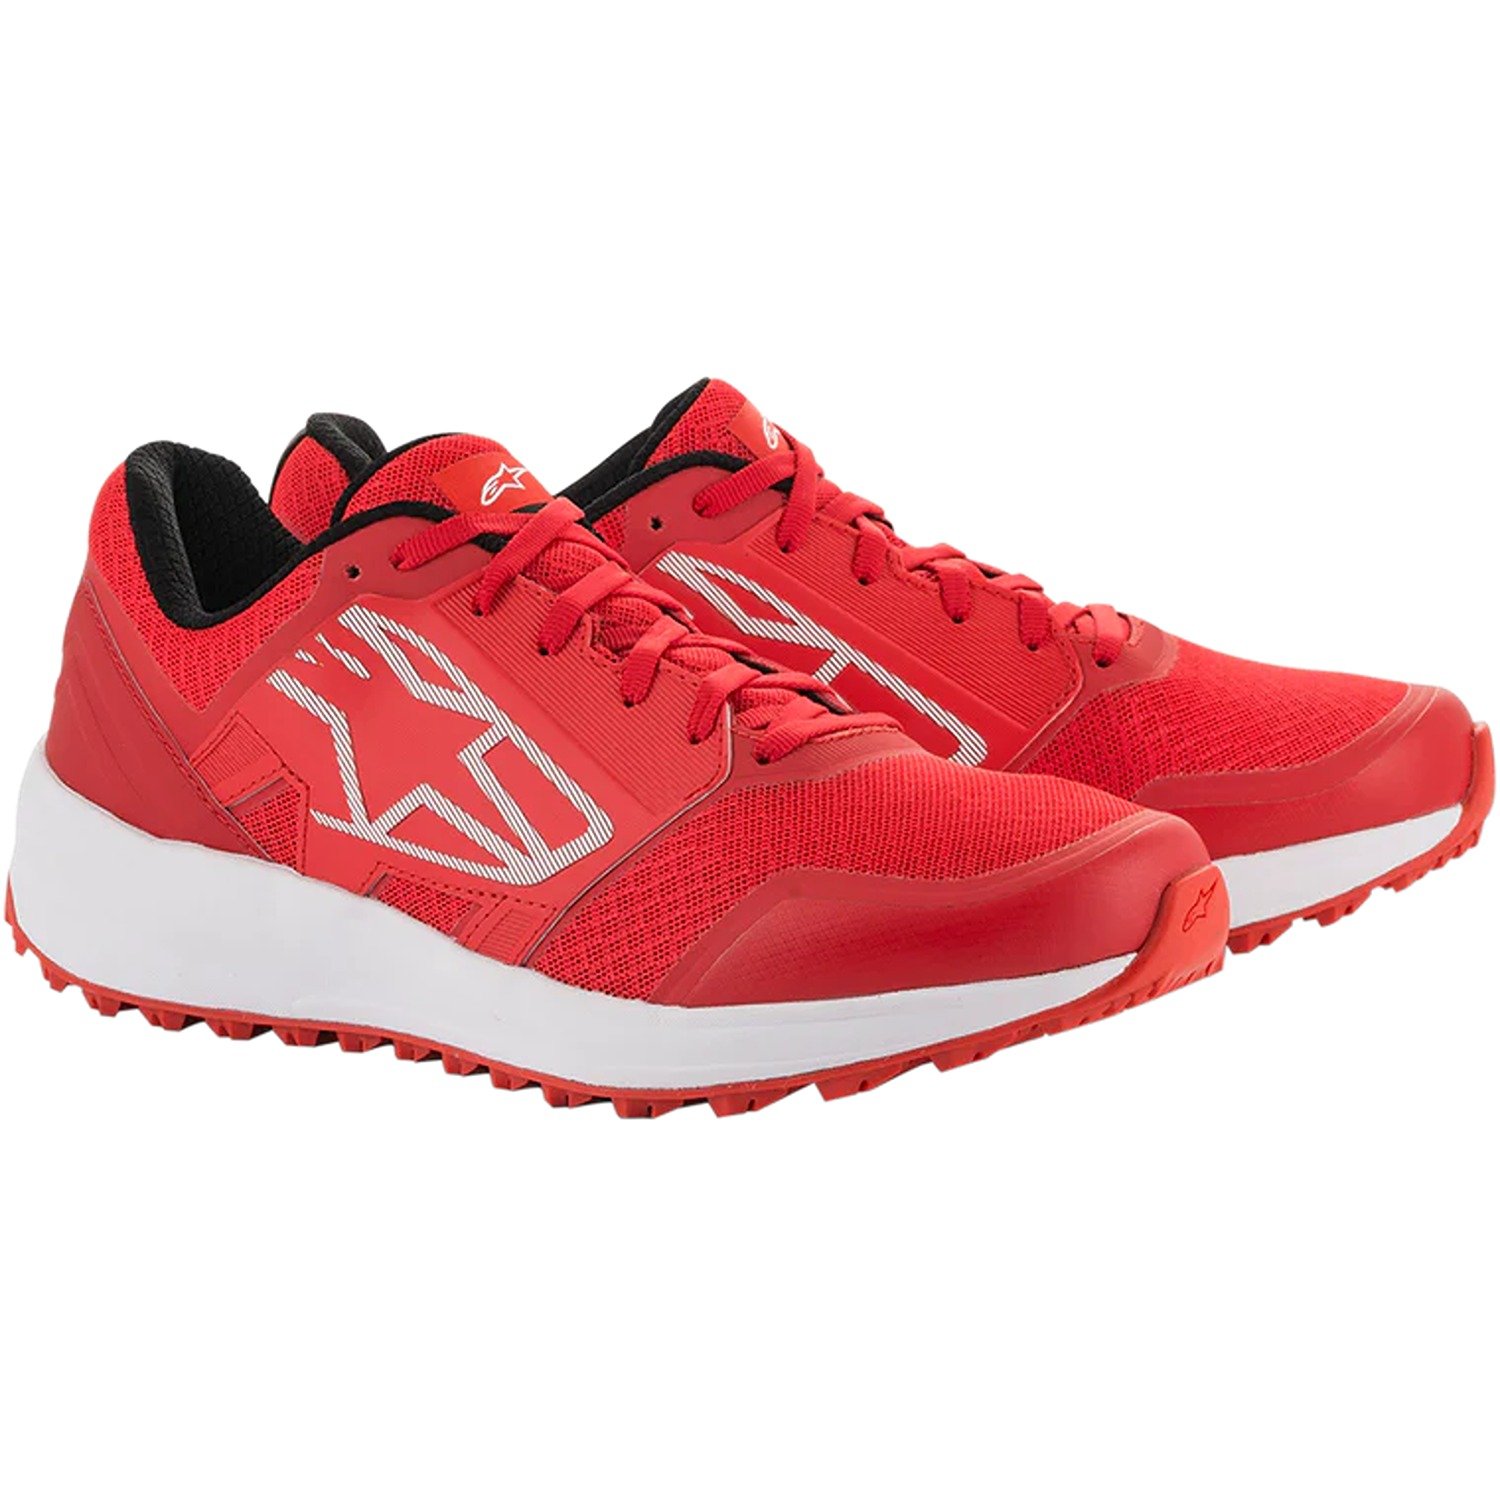 Image of Alpinestars Meta Trail Shoes Red White Size US 13 EN